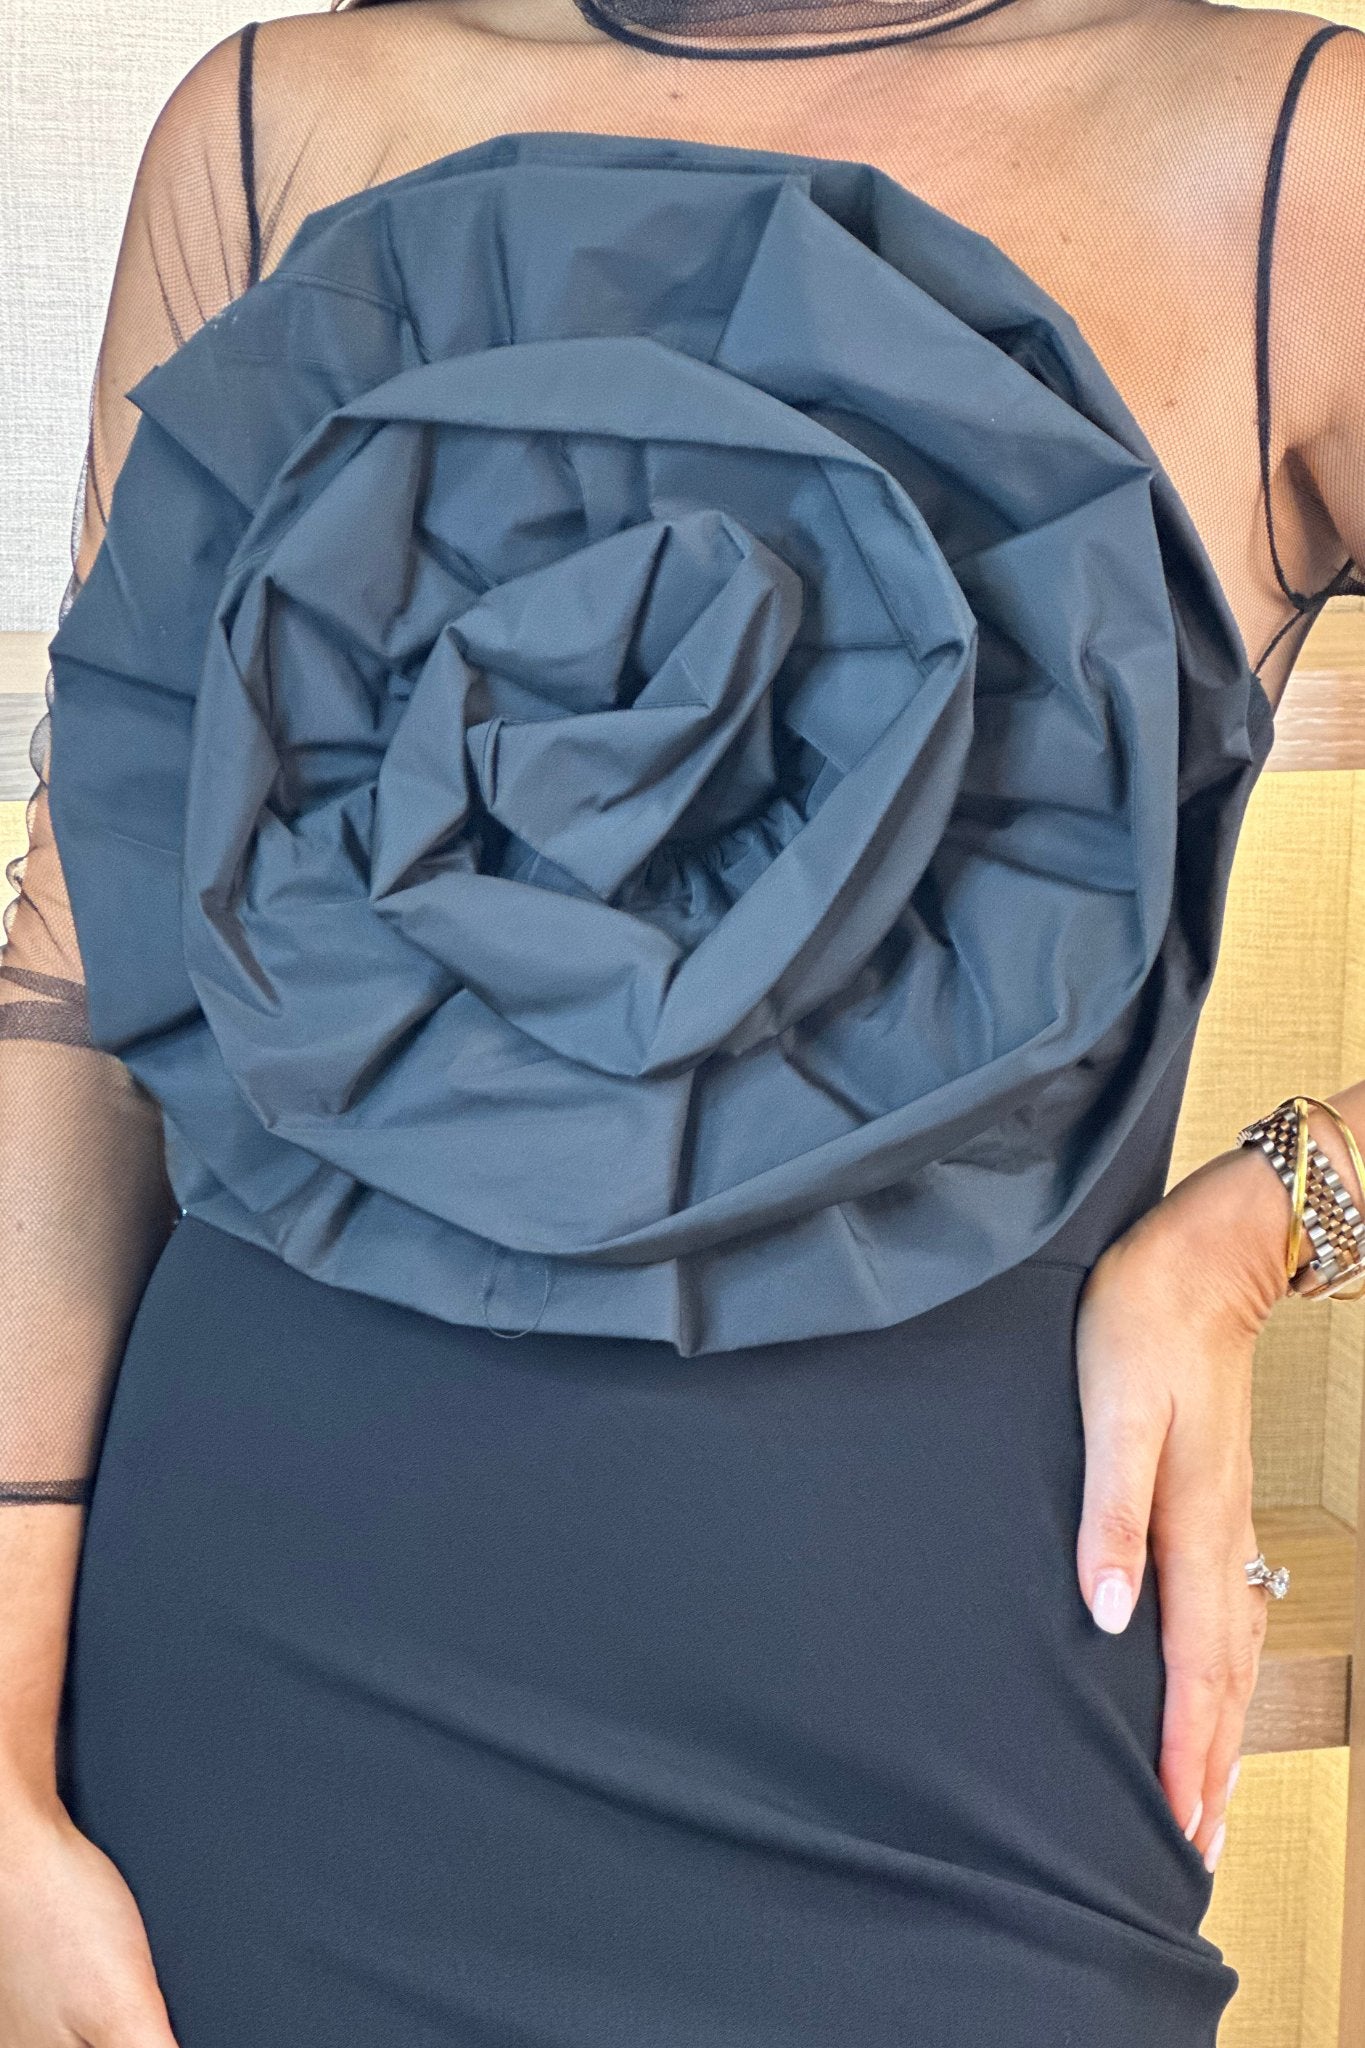 Marissa Mesh Top Floral Dress In Black - The Walk in Wardrobe